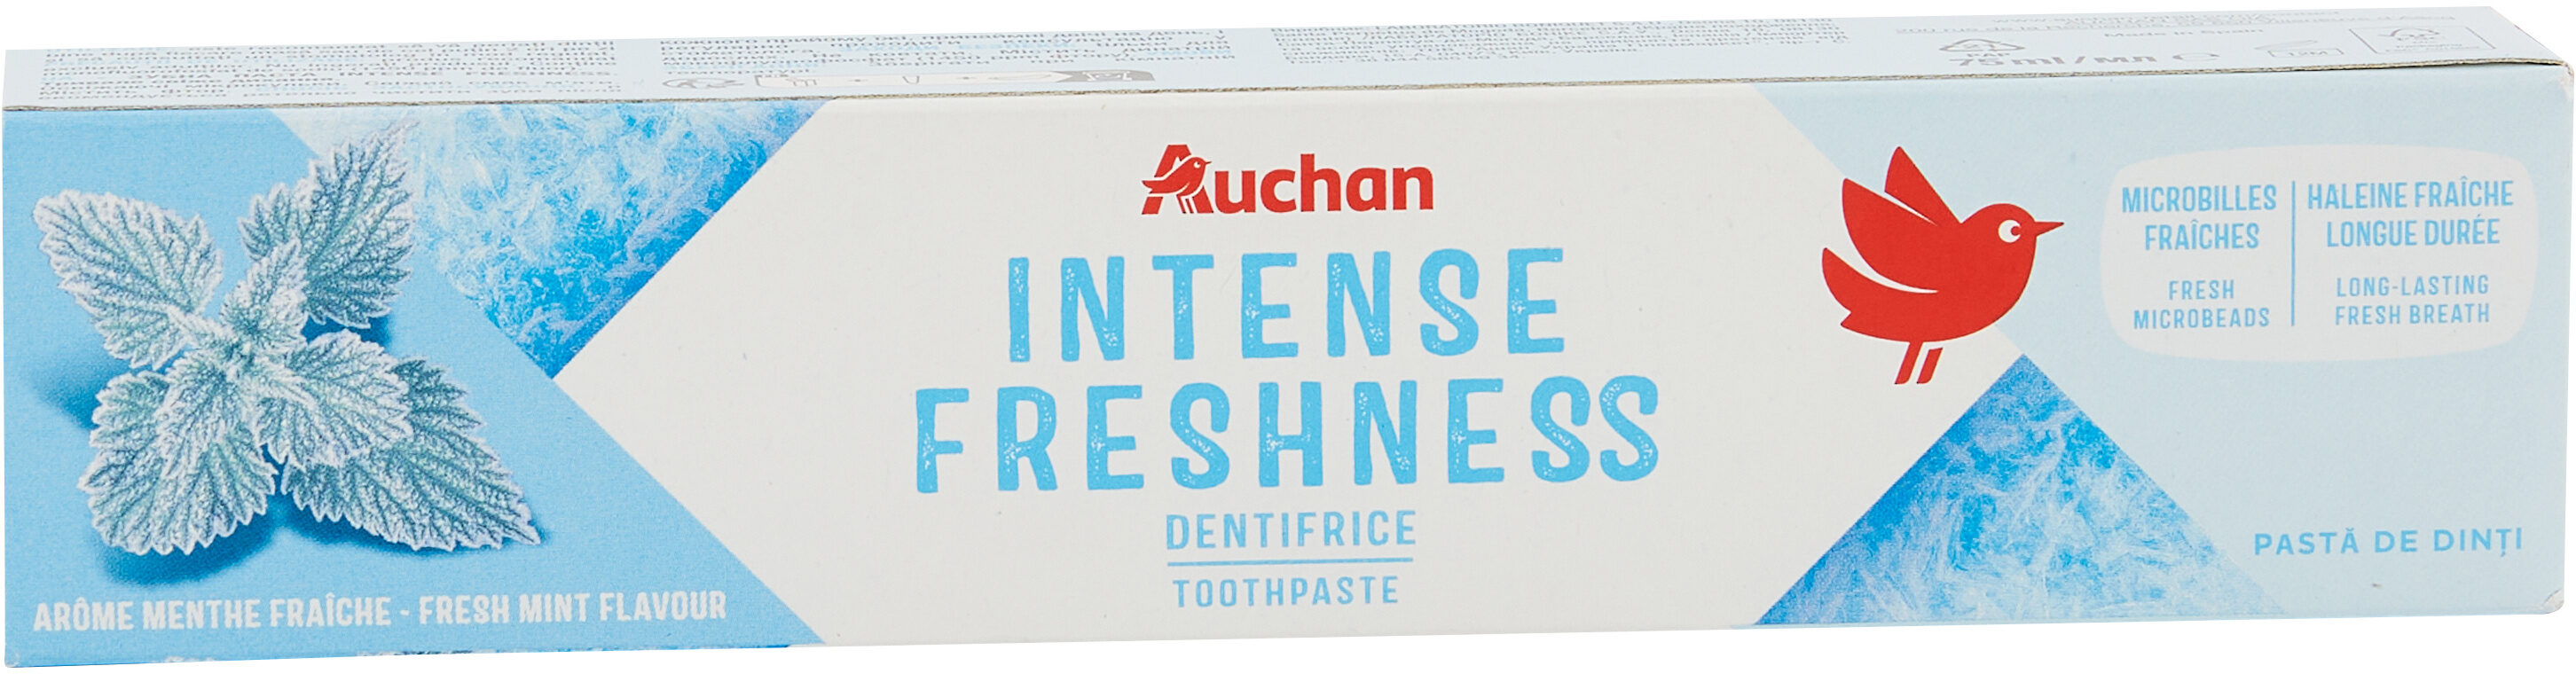 Auchan dentifrice fraîcheur intense tube 75ml - Produit - fr